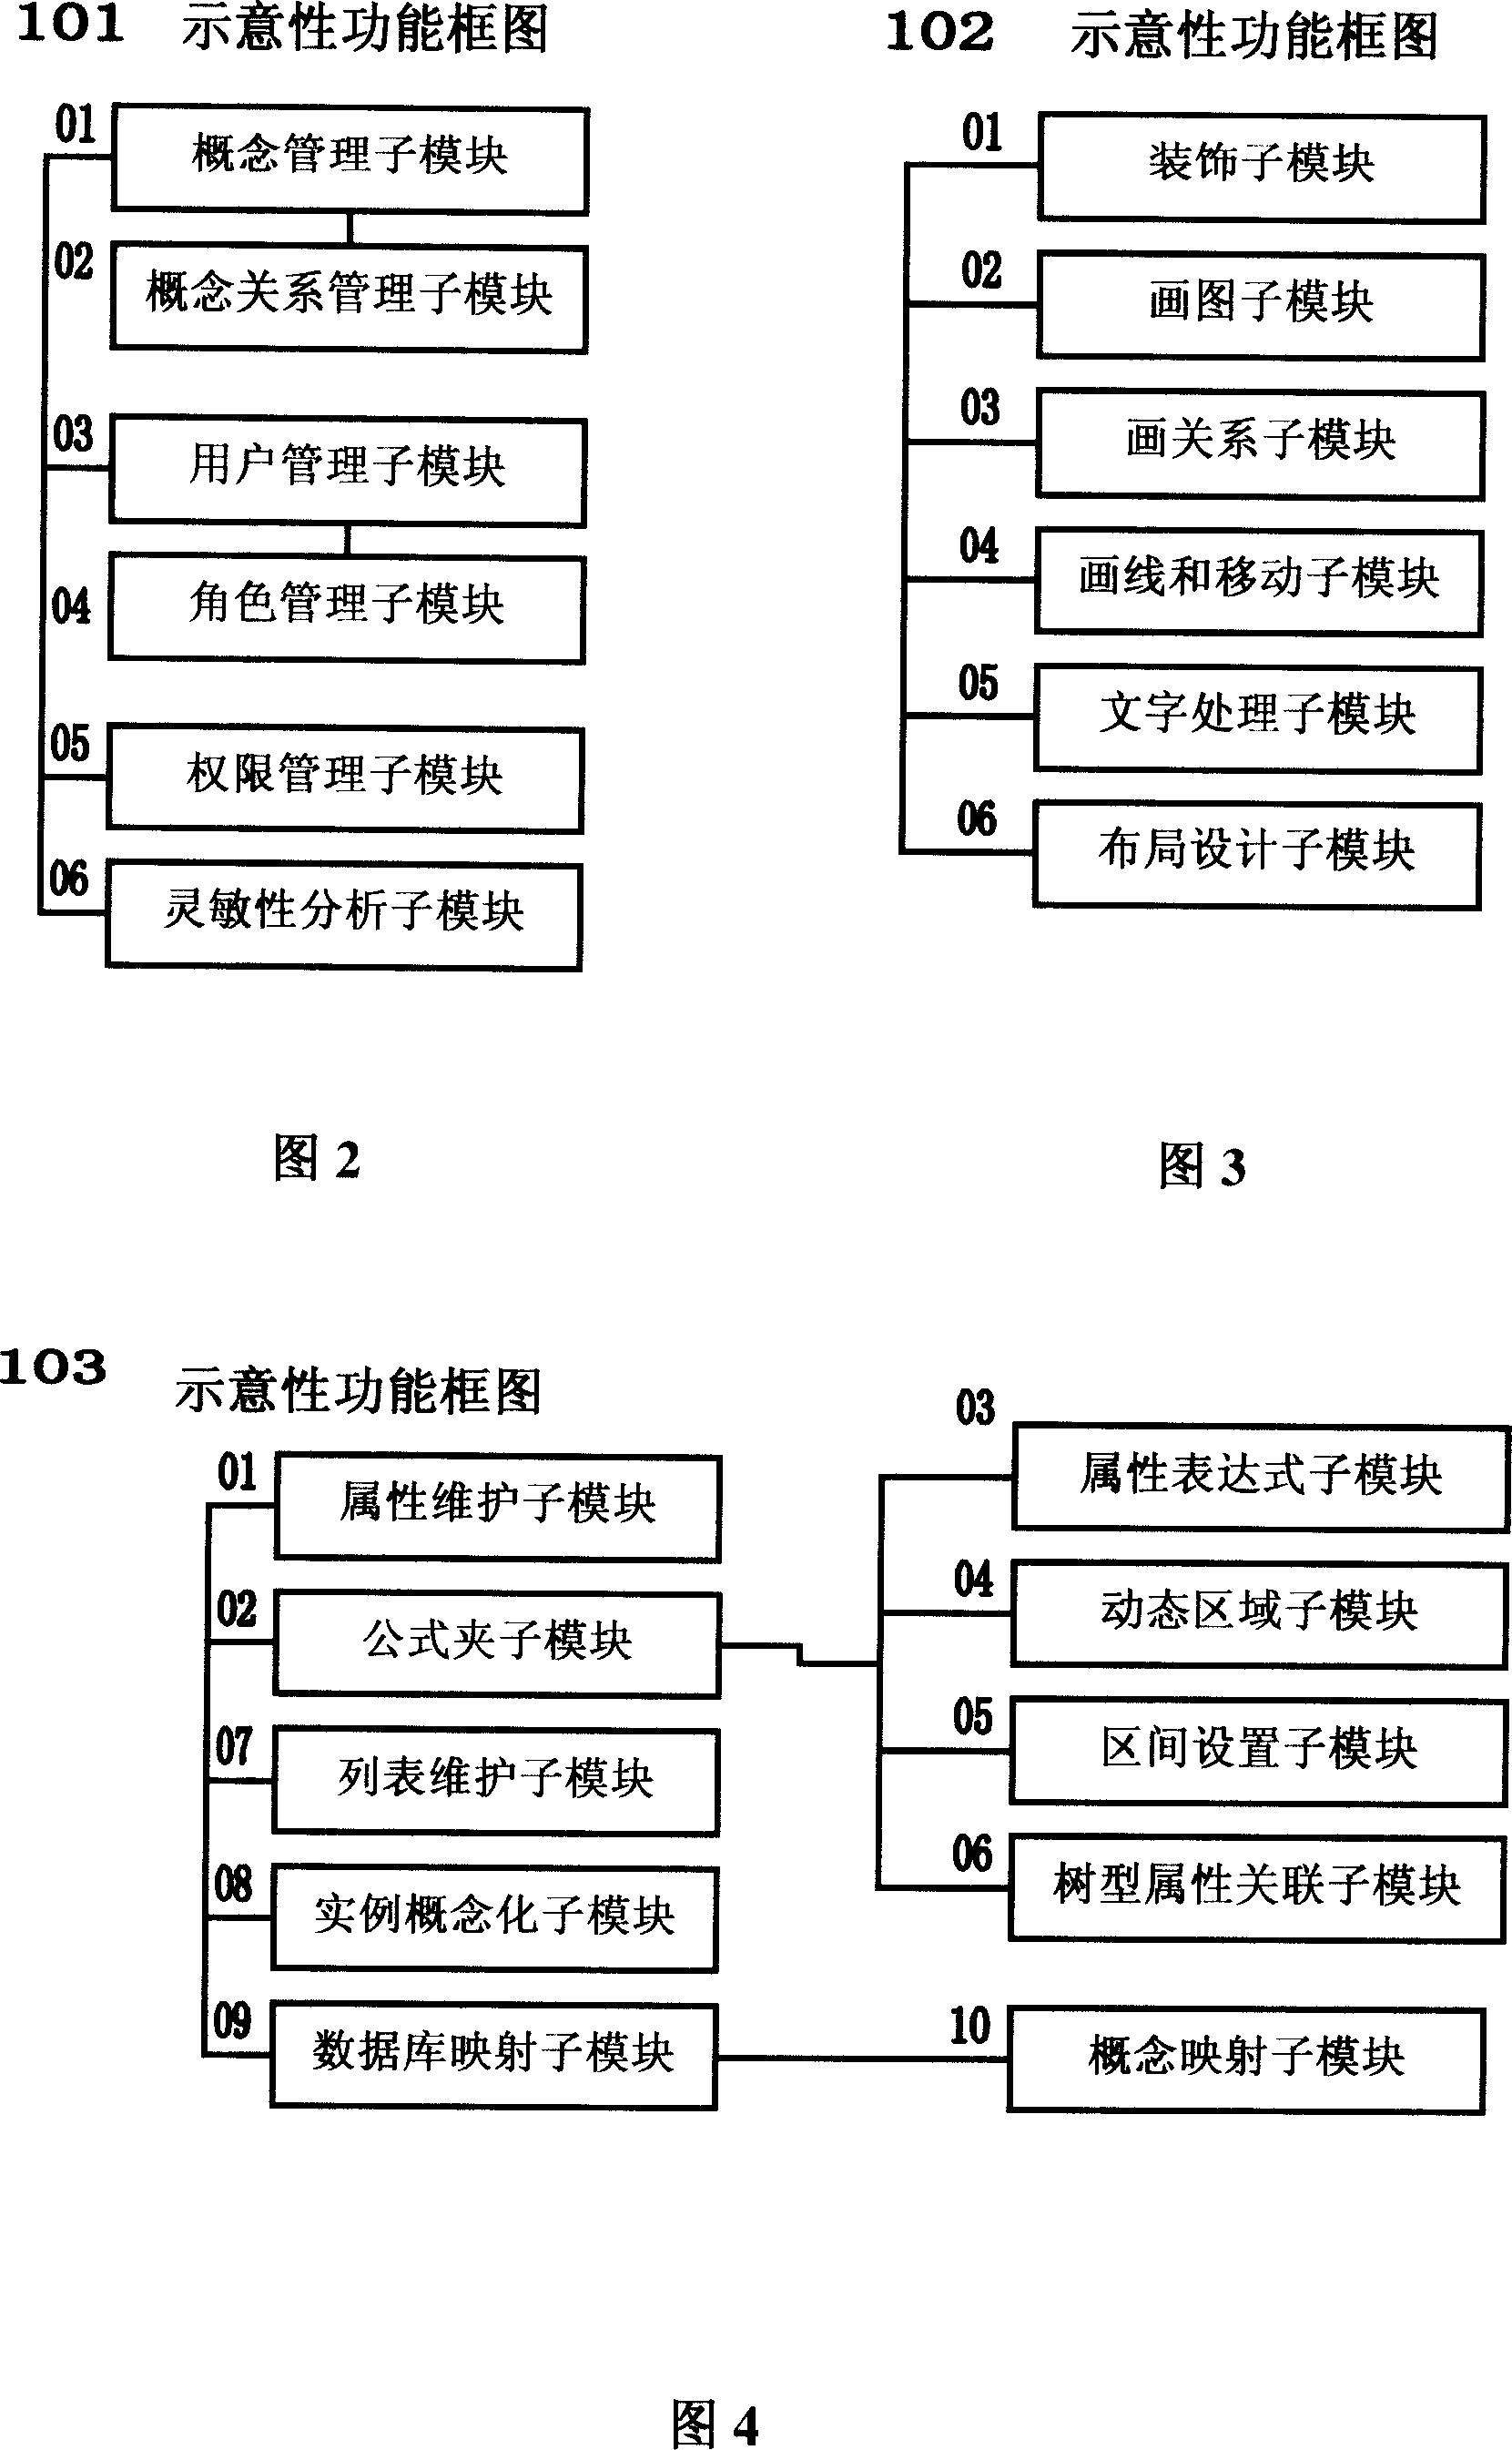 Design system for computer application system